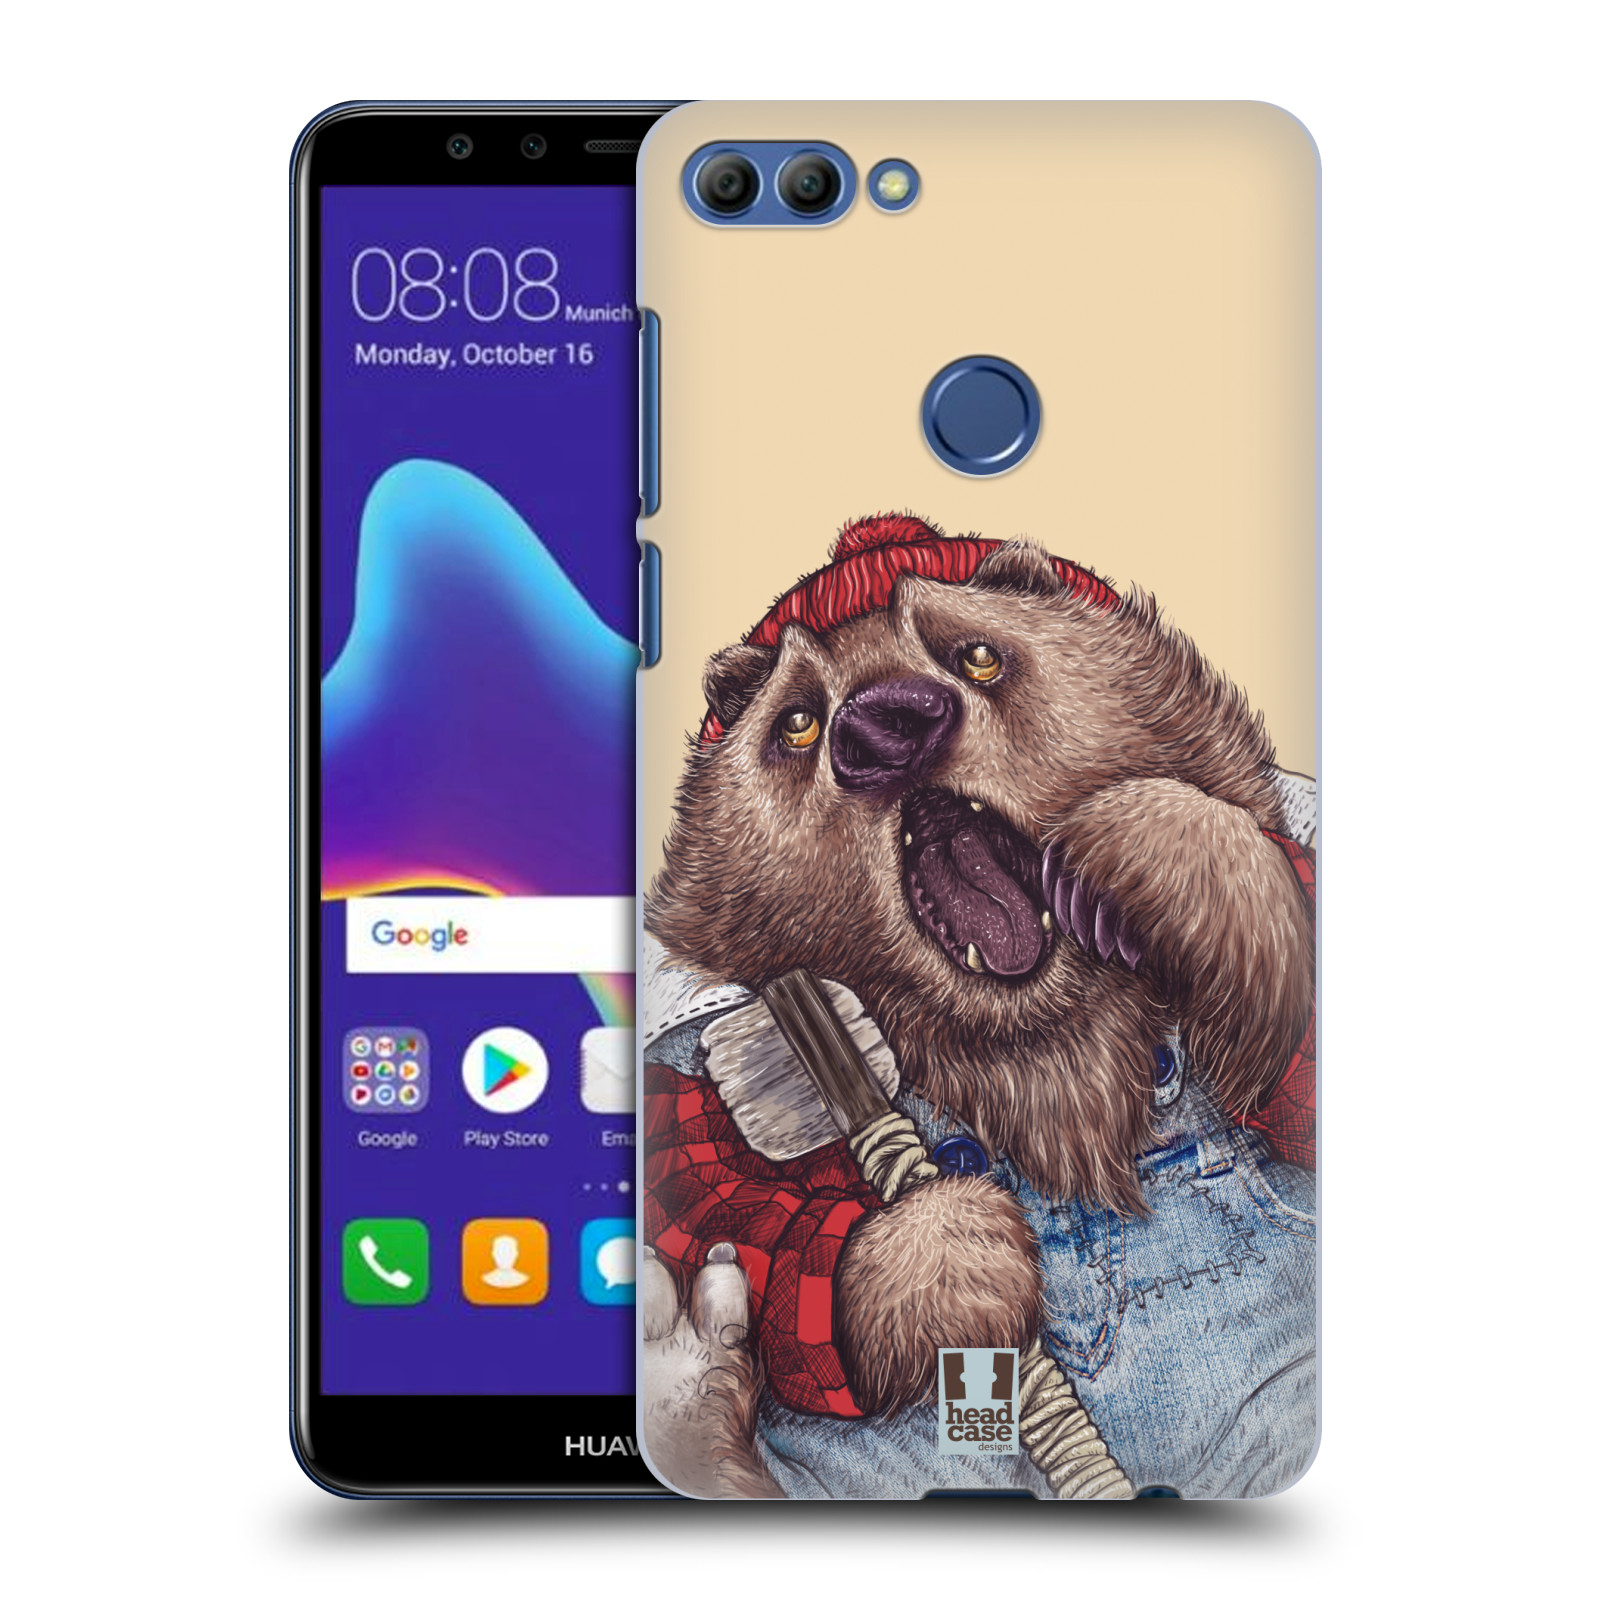 HEAD CASE plastový obal na mobil Huawei Y9 2018 vzor Kreslená zvířátka medvěd